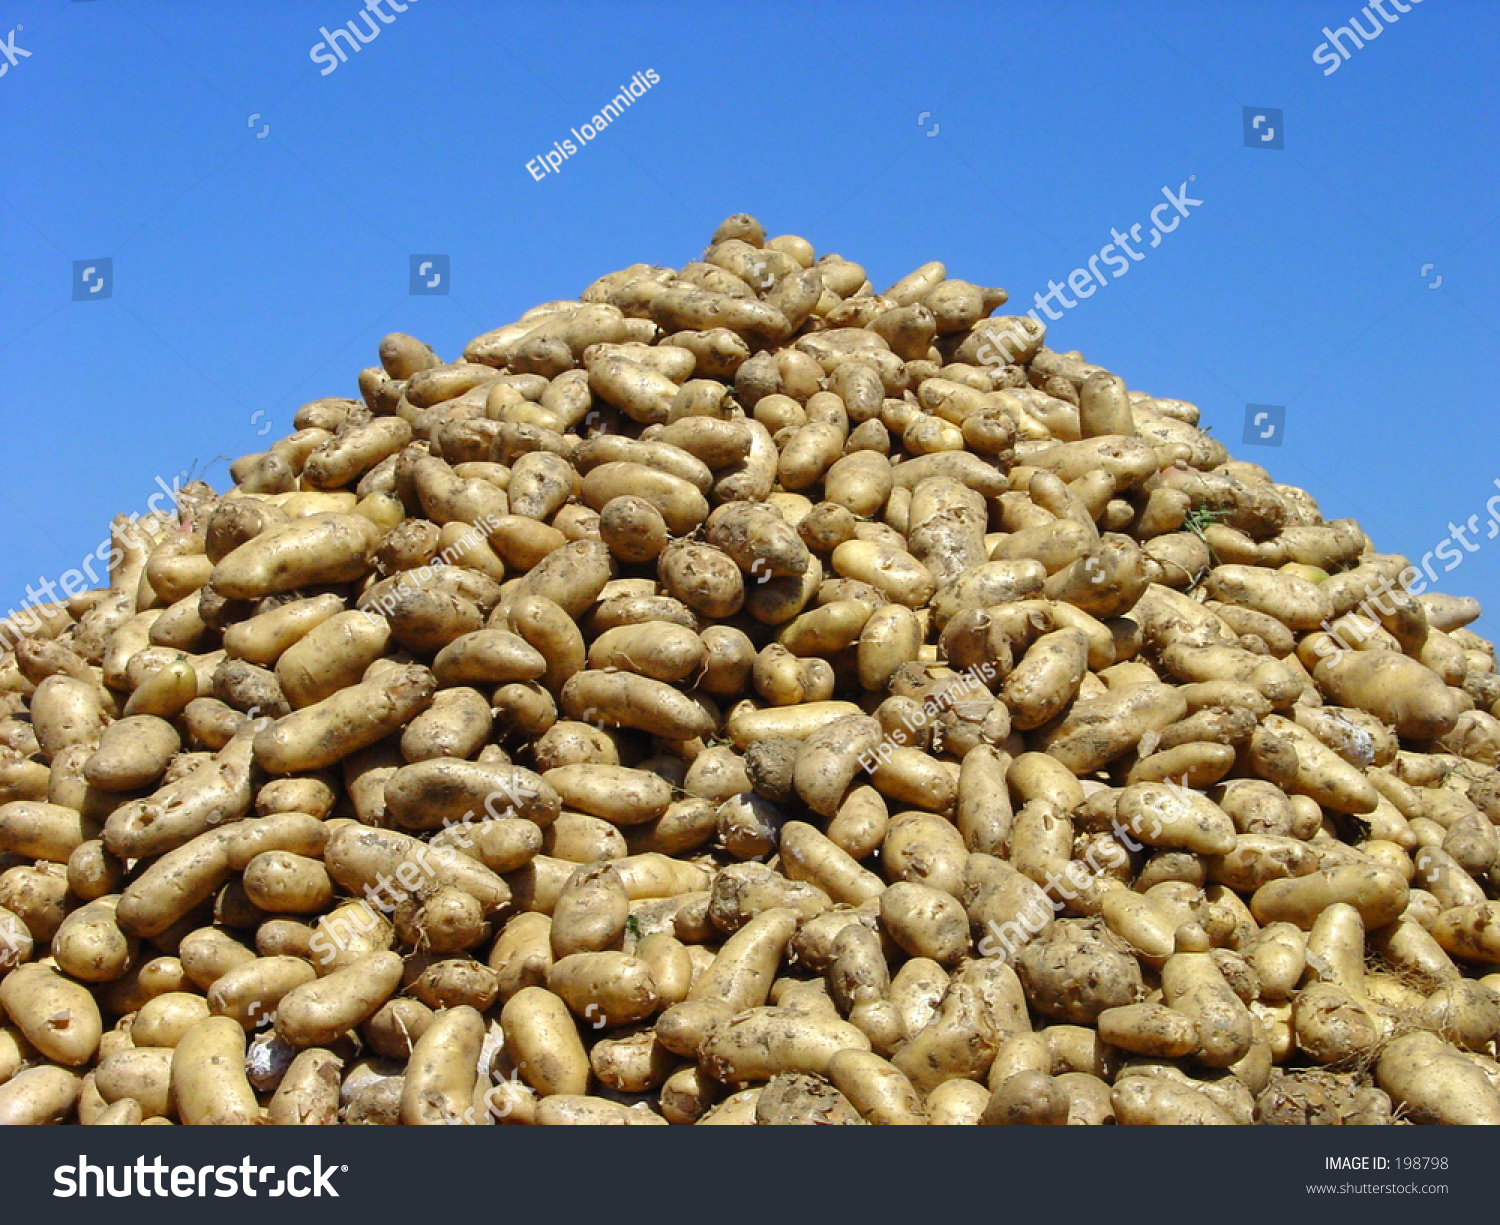 stock-photo-a-pile-of-potatoes-198798.jpg